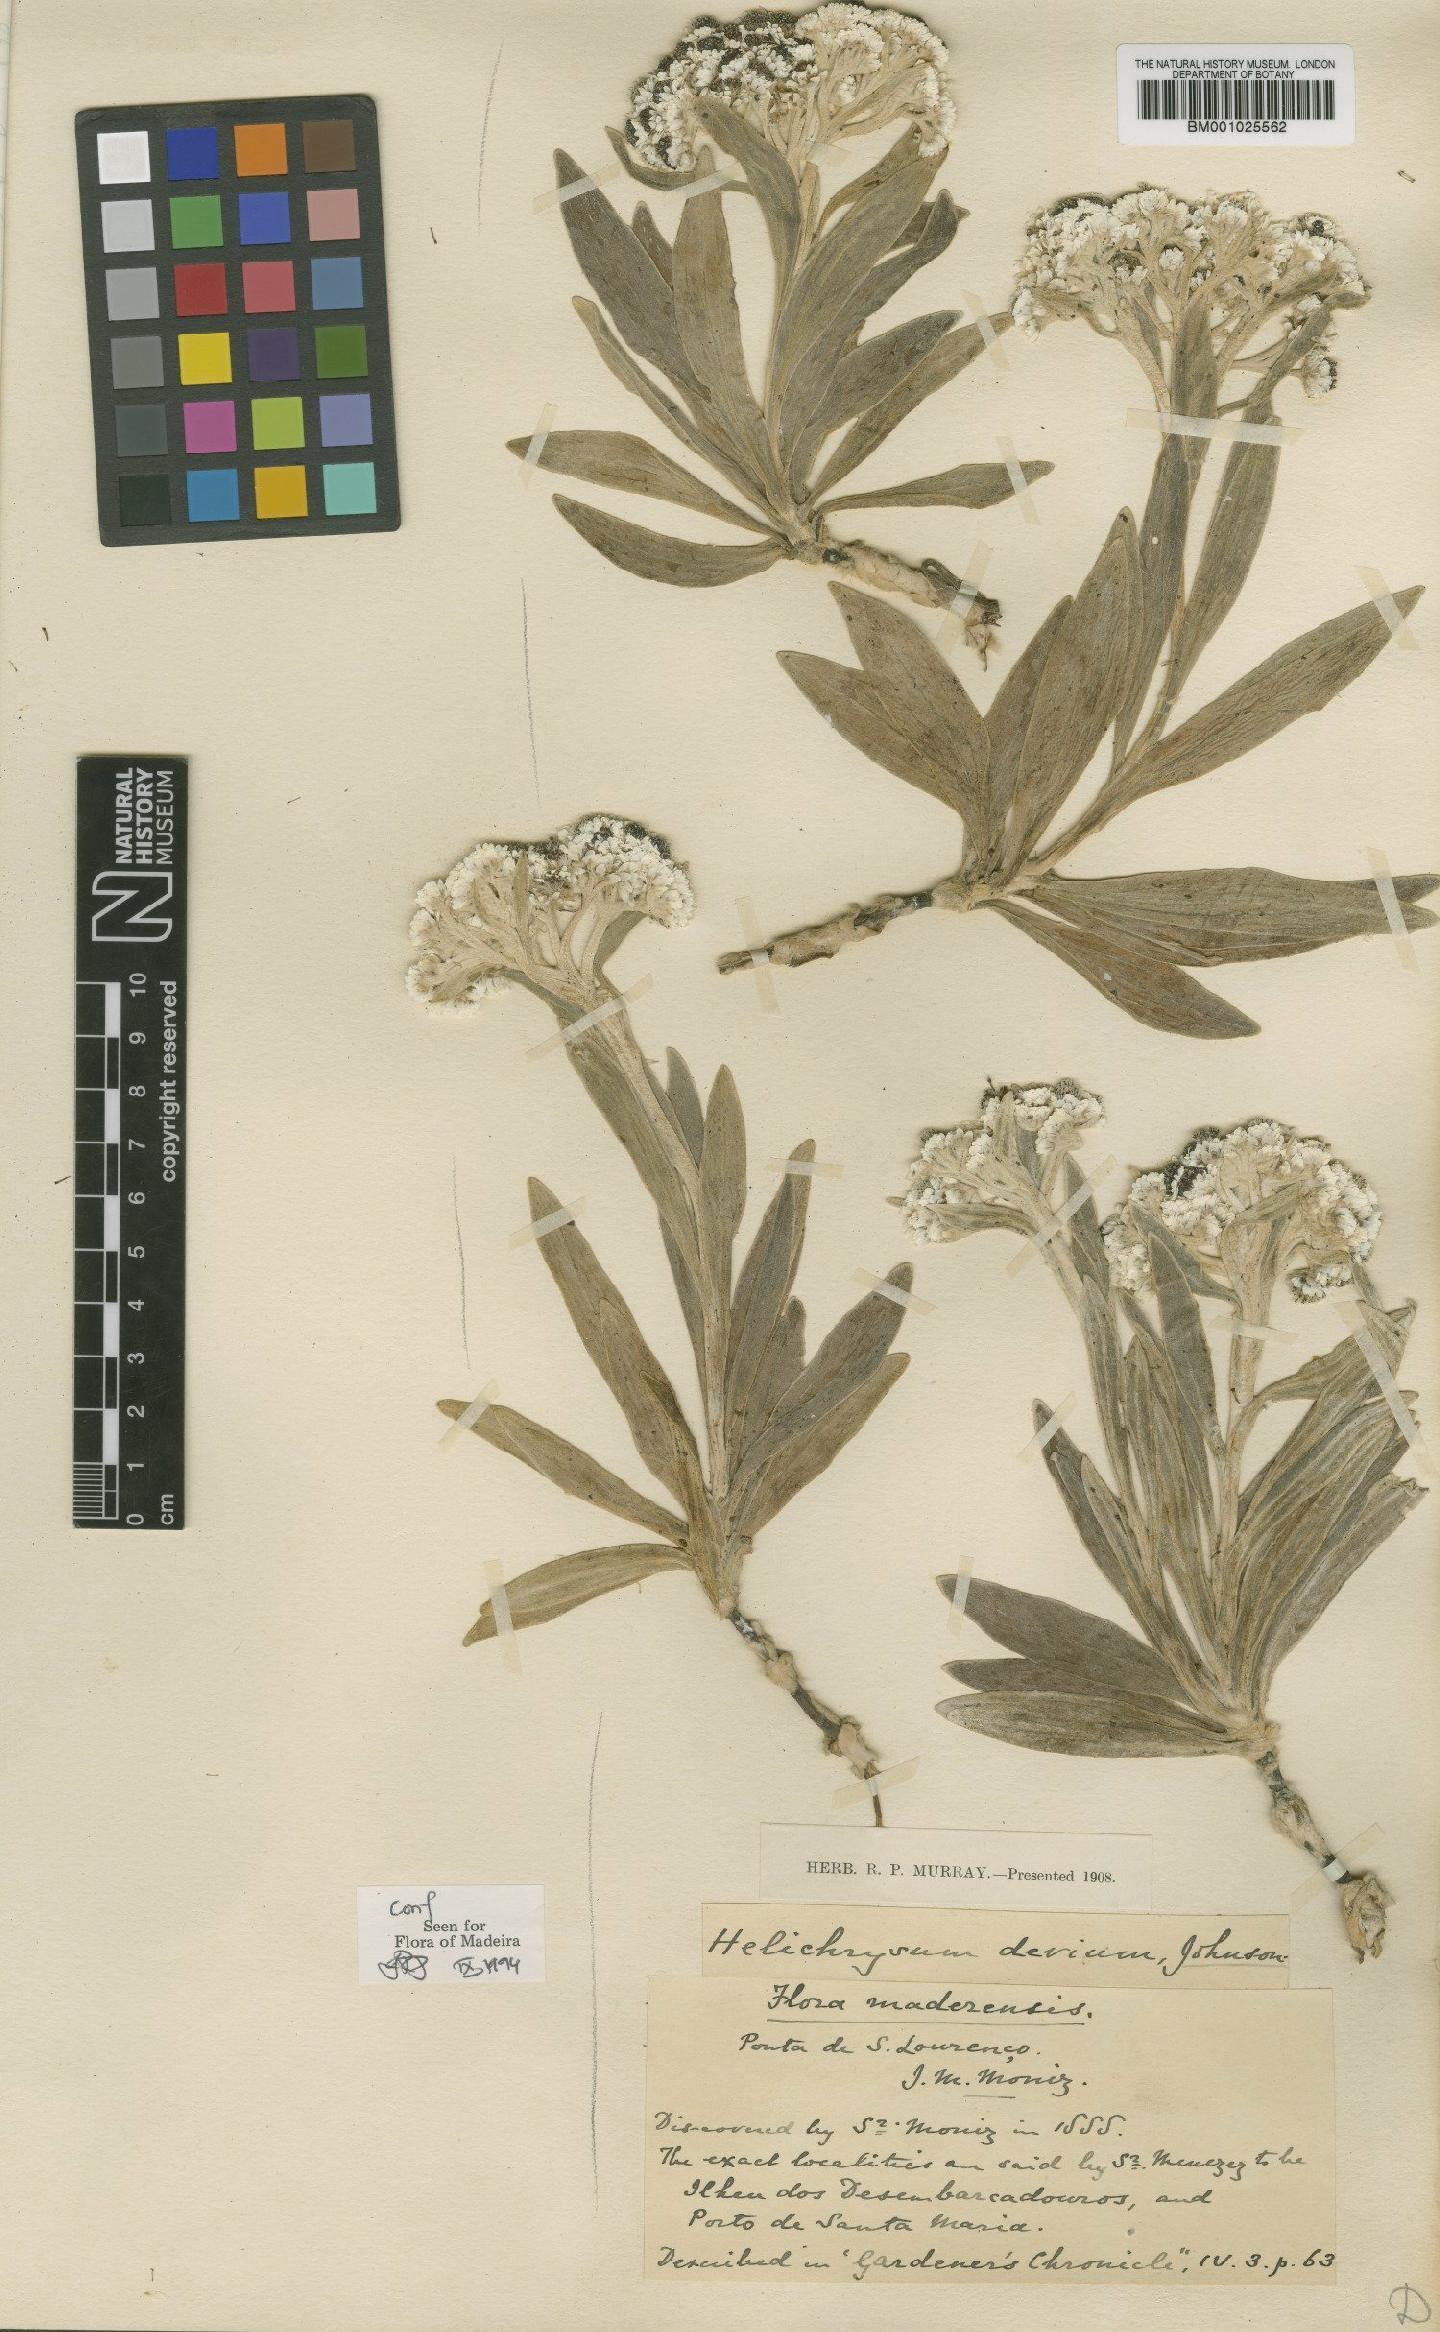 To NHMUK collection (Helichrysum devium Johns; Type; NHMUK:ecatalogue:1154781)